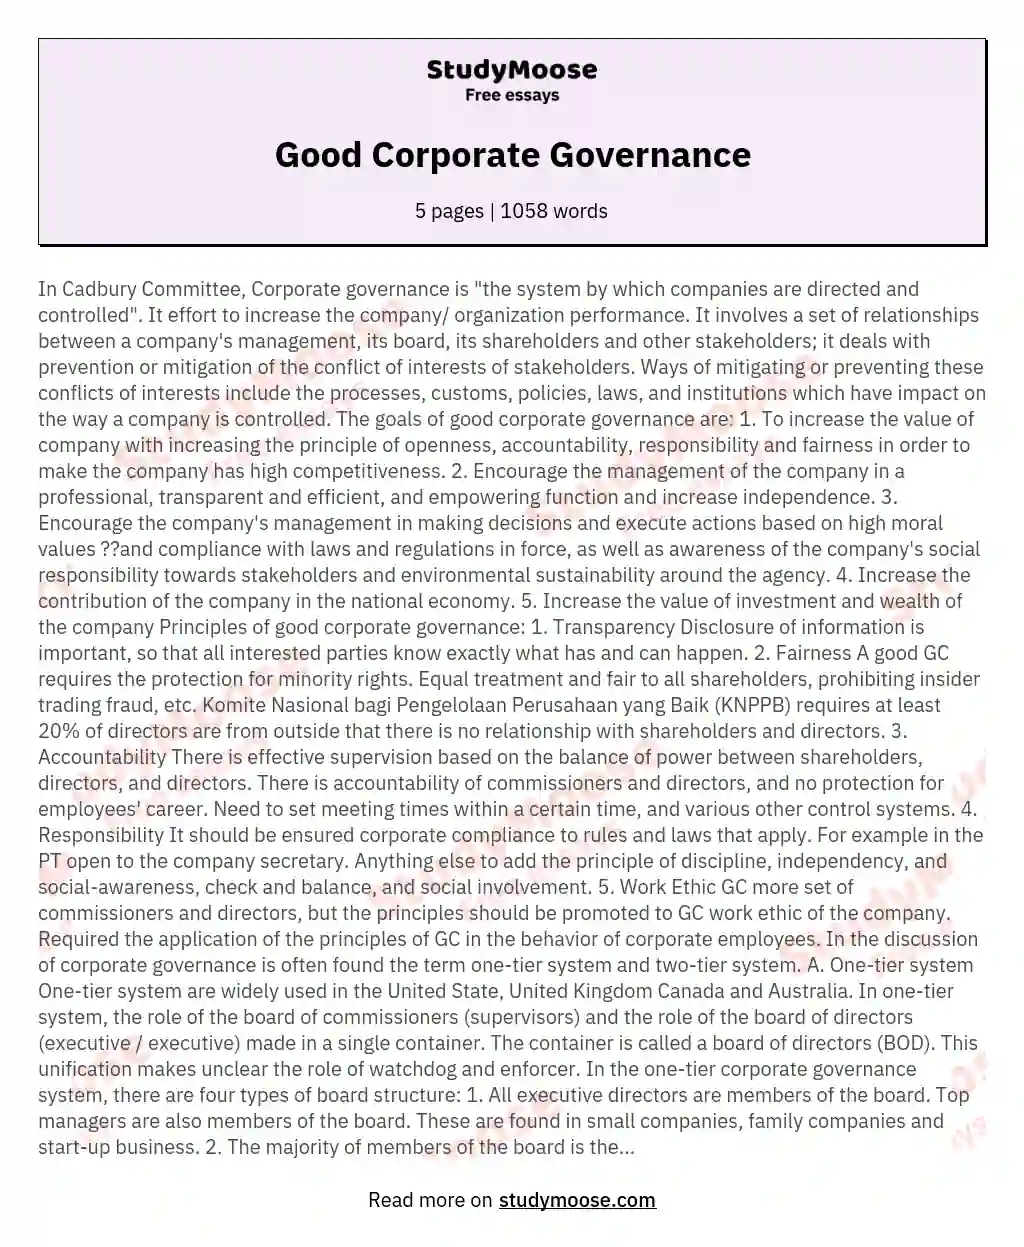 Good Corporate Governance essay